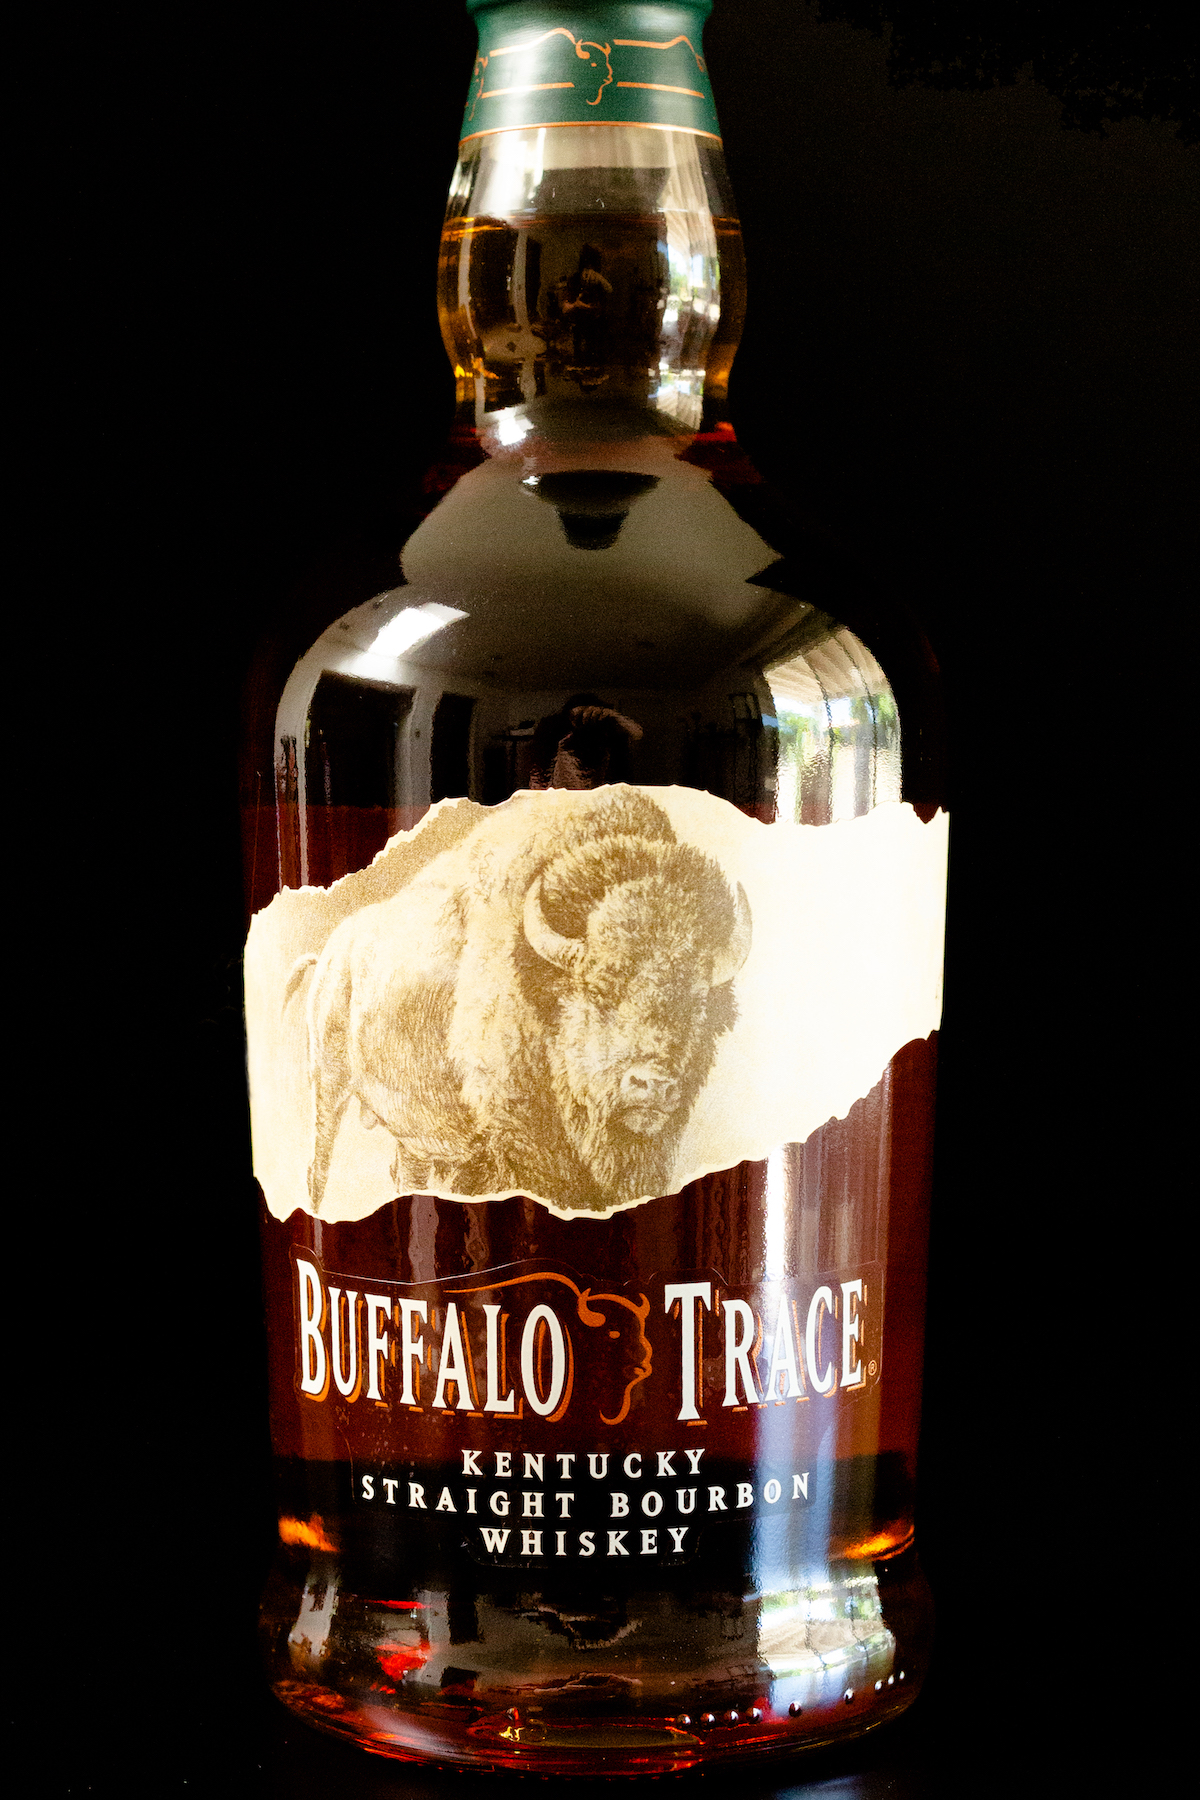 A bottle of Buffalo Trace Bourbon on a black background.